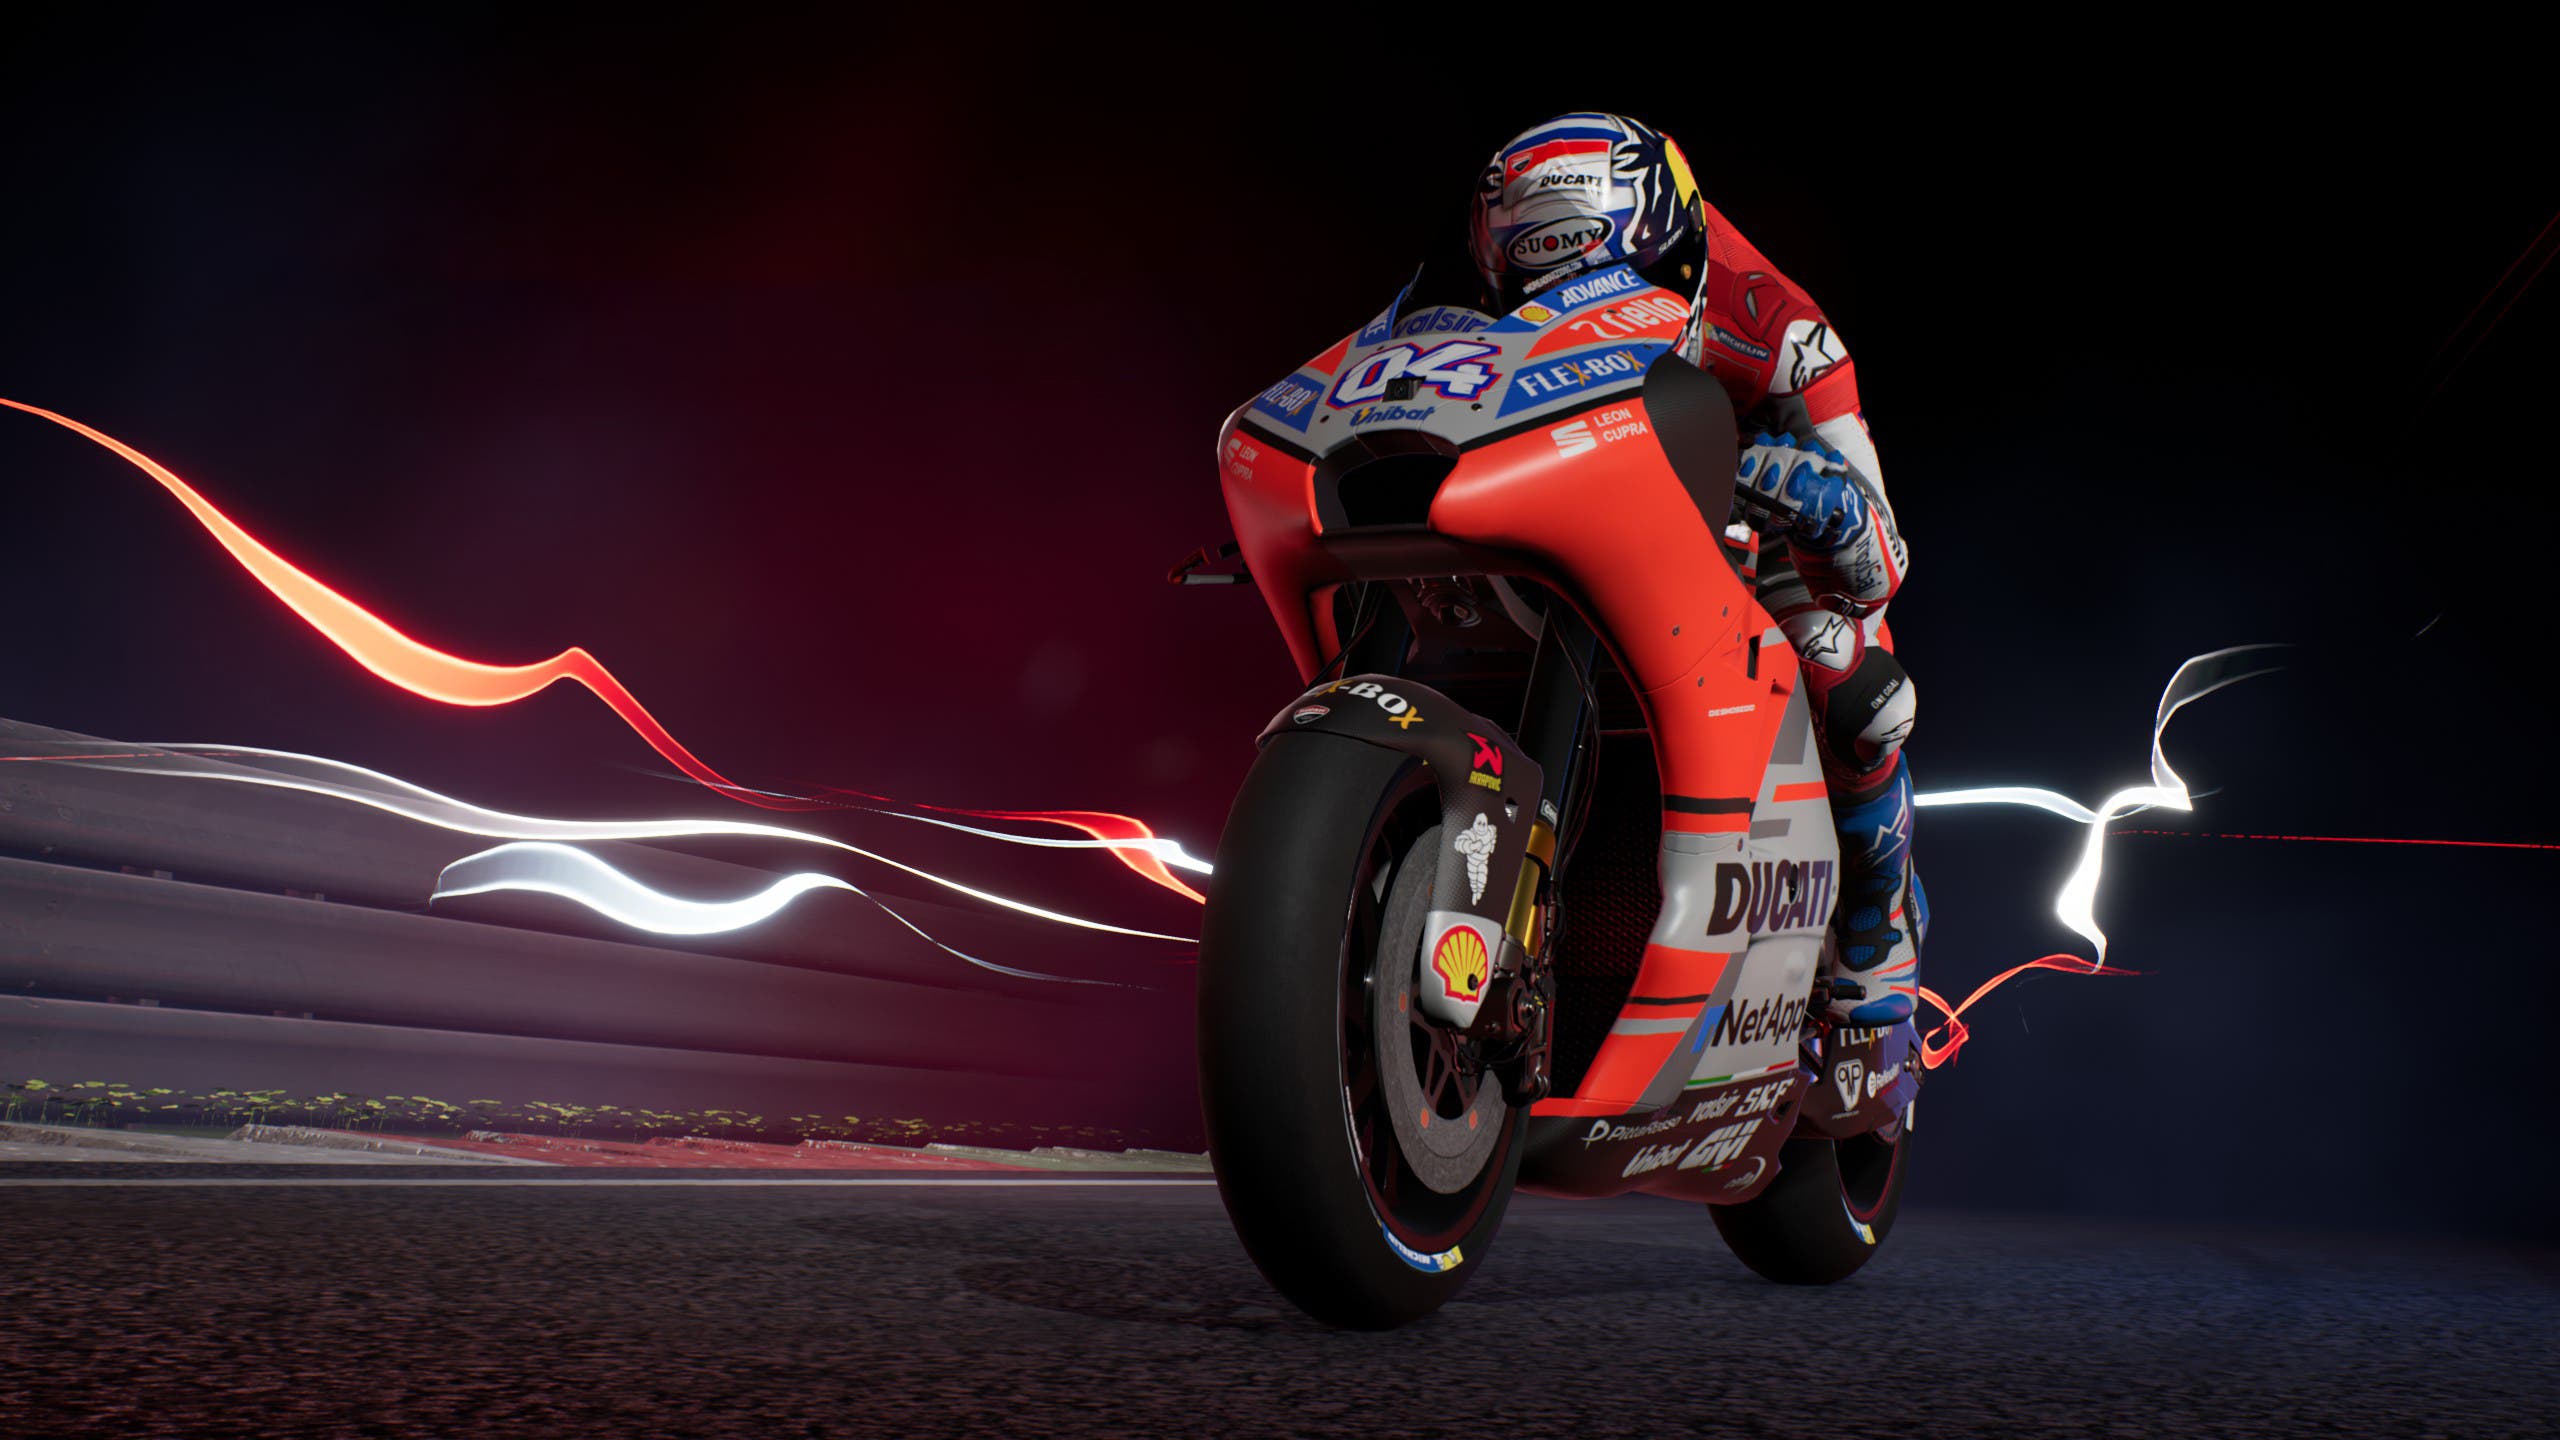 MotoGP18 featured